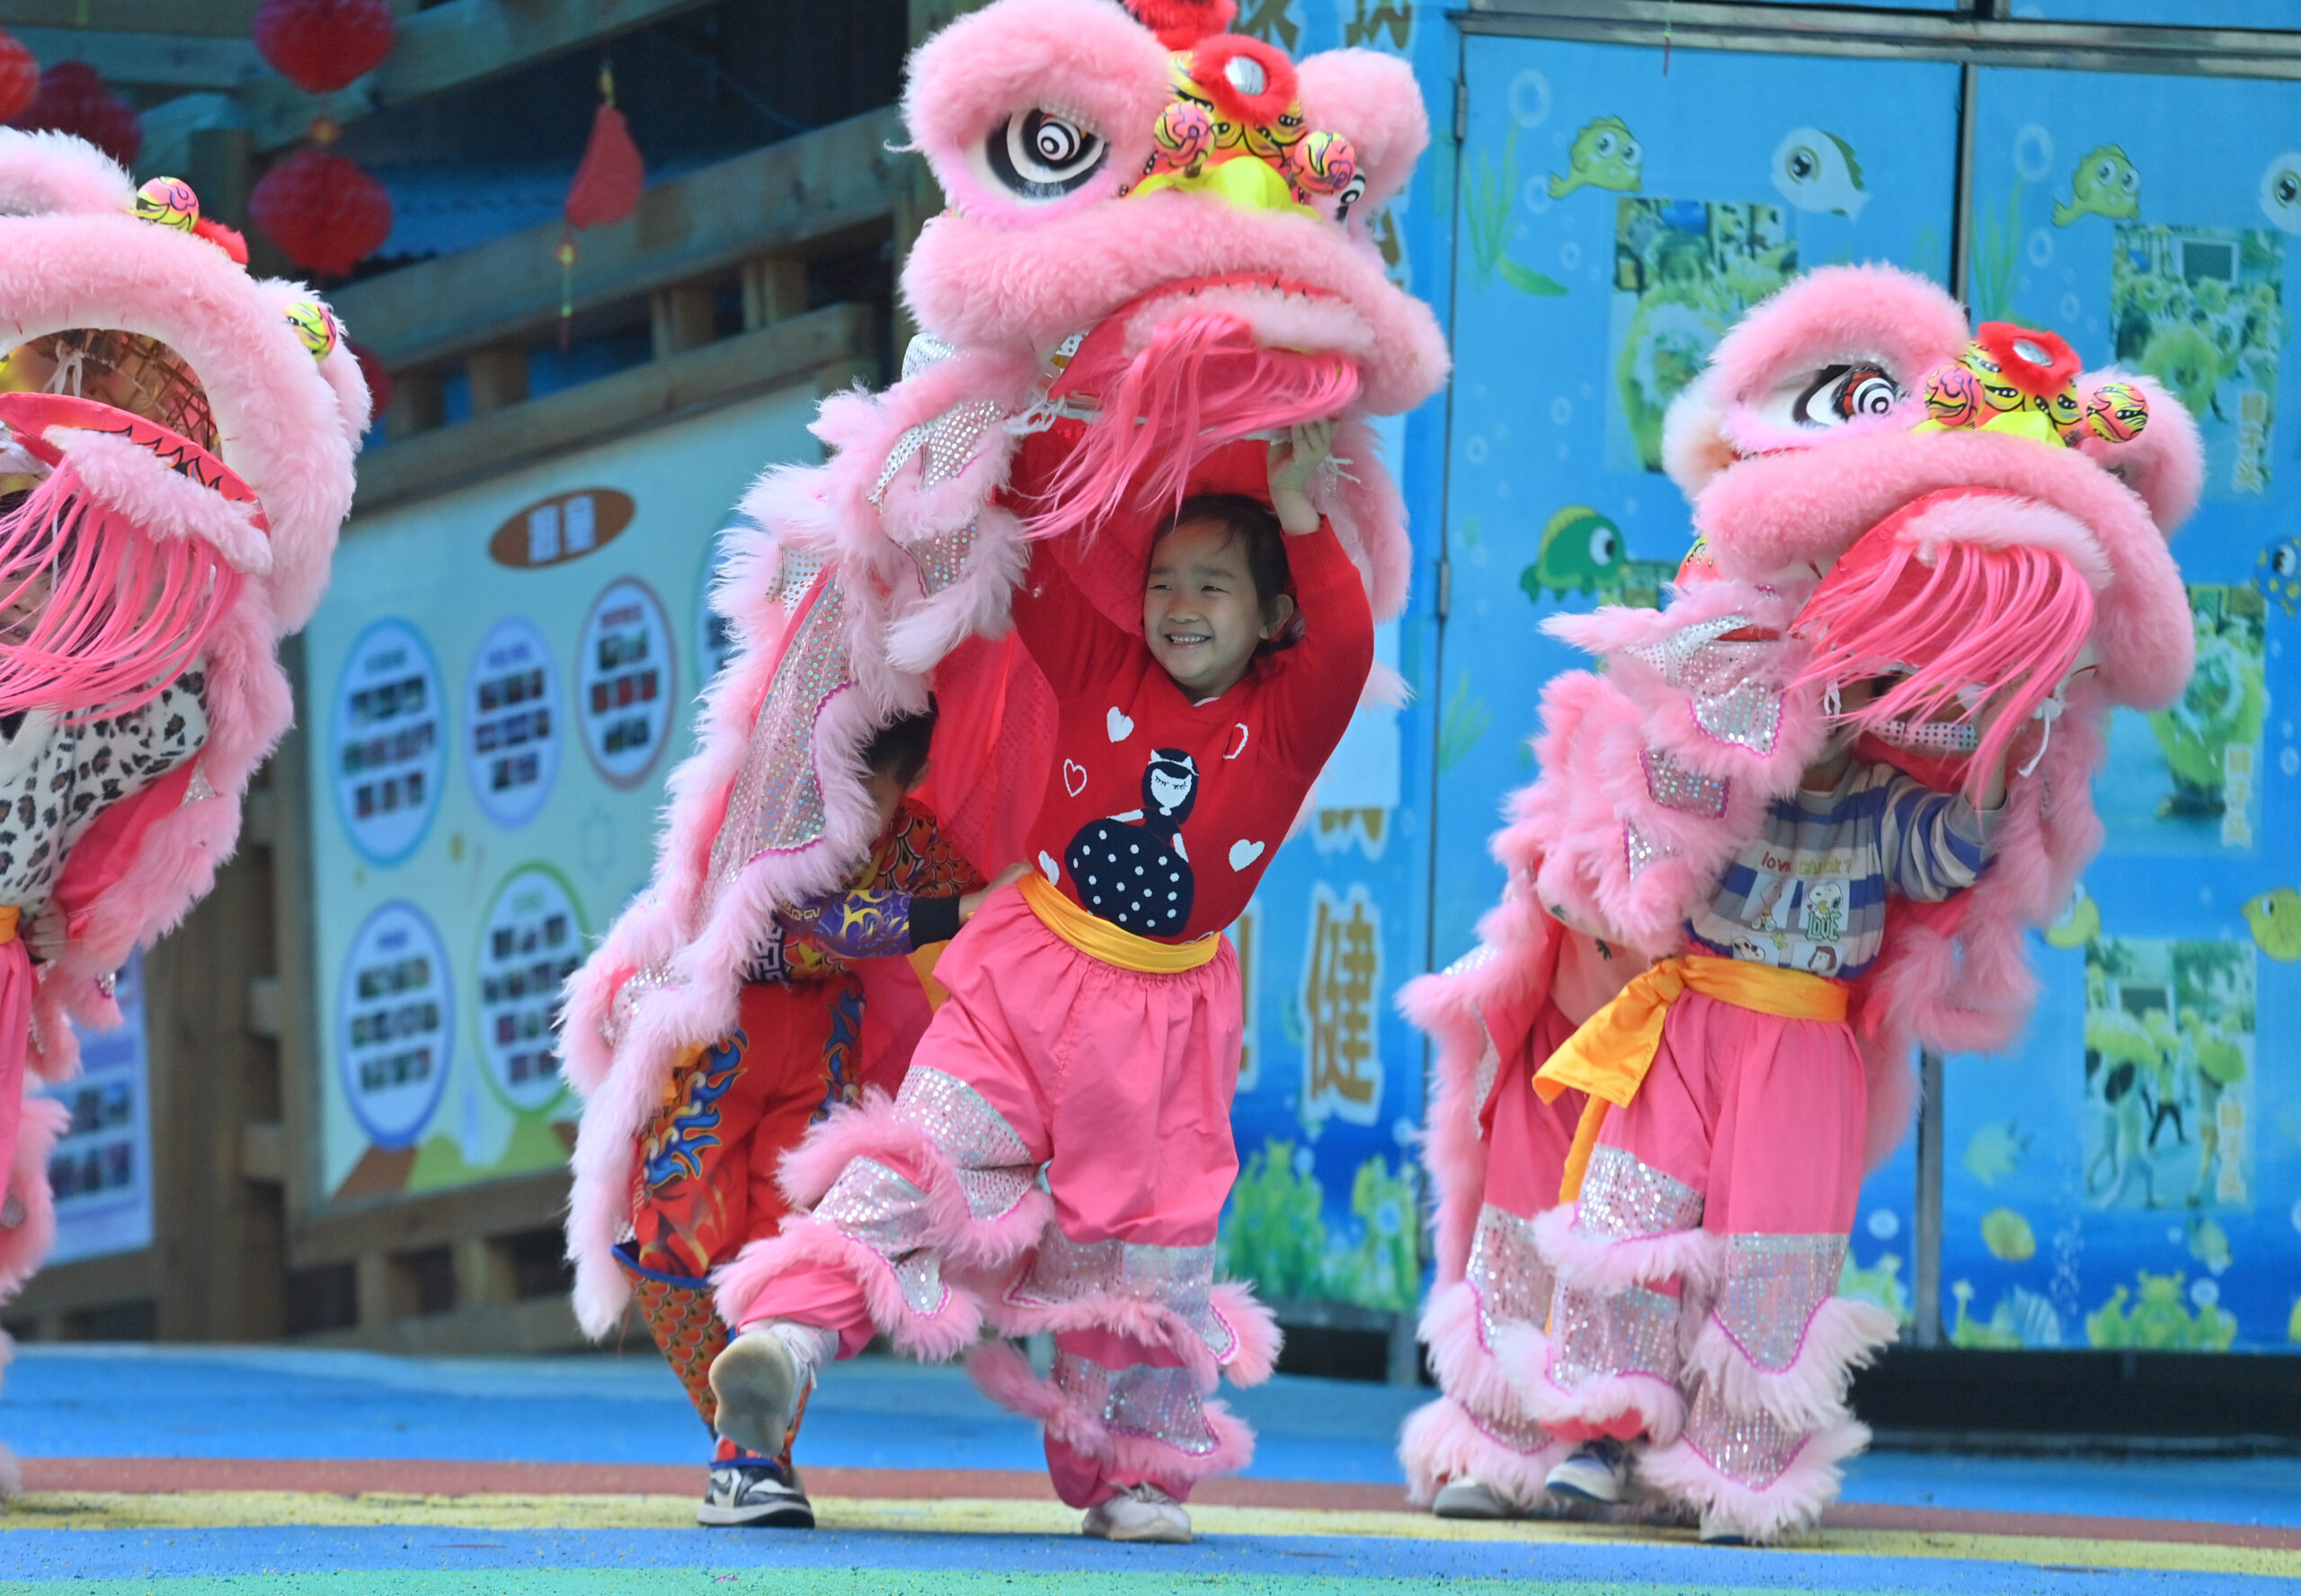 WUZHOU, Anak-anak berlatih tari barongsai di sebuah taman kanak-kanak di wilayah Tengxian di Wuzhou, Daerah Otonom Etnis Zhuang Guangxi, China selatan, pada 28 Maret 2023. Tari Barongsai Tengxian, yang terdaftar sebagai warisan budaya takbenda nasional China, merupakan perpaduan antara seni bela diri, tarian, musik, dan akrobatik. Dalam beberapa tahun terakhir, wilayah Tengxian aktif mengintegrasikan tari barongsai dengan mata pelajaran lainnya di taman kanak-kanak dan sekolah, dengan tujuan untuk mewariskan bentuk seni tradisional ini kepada generasi muda. (Xinhua/Huang Xiaobang)